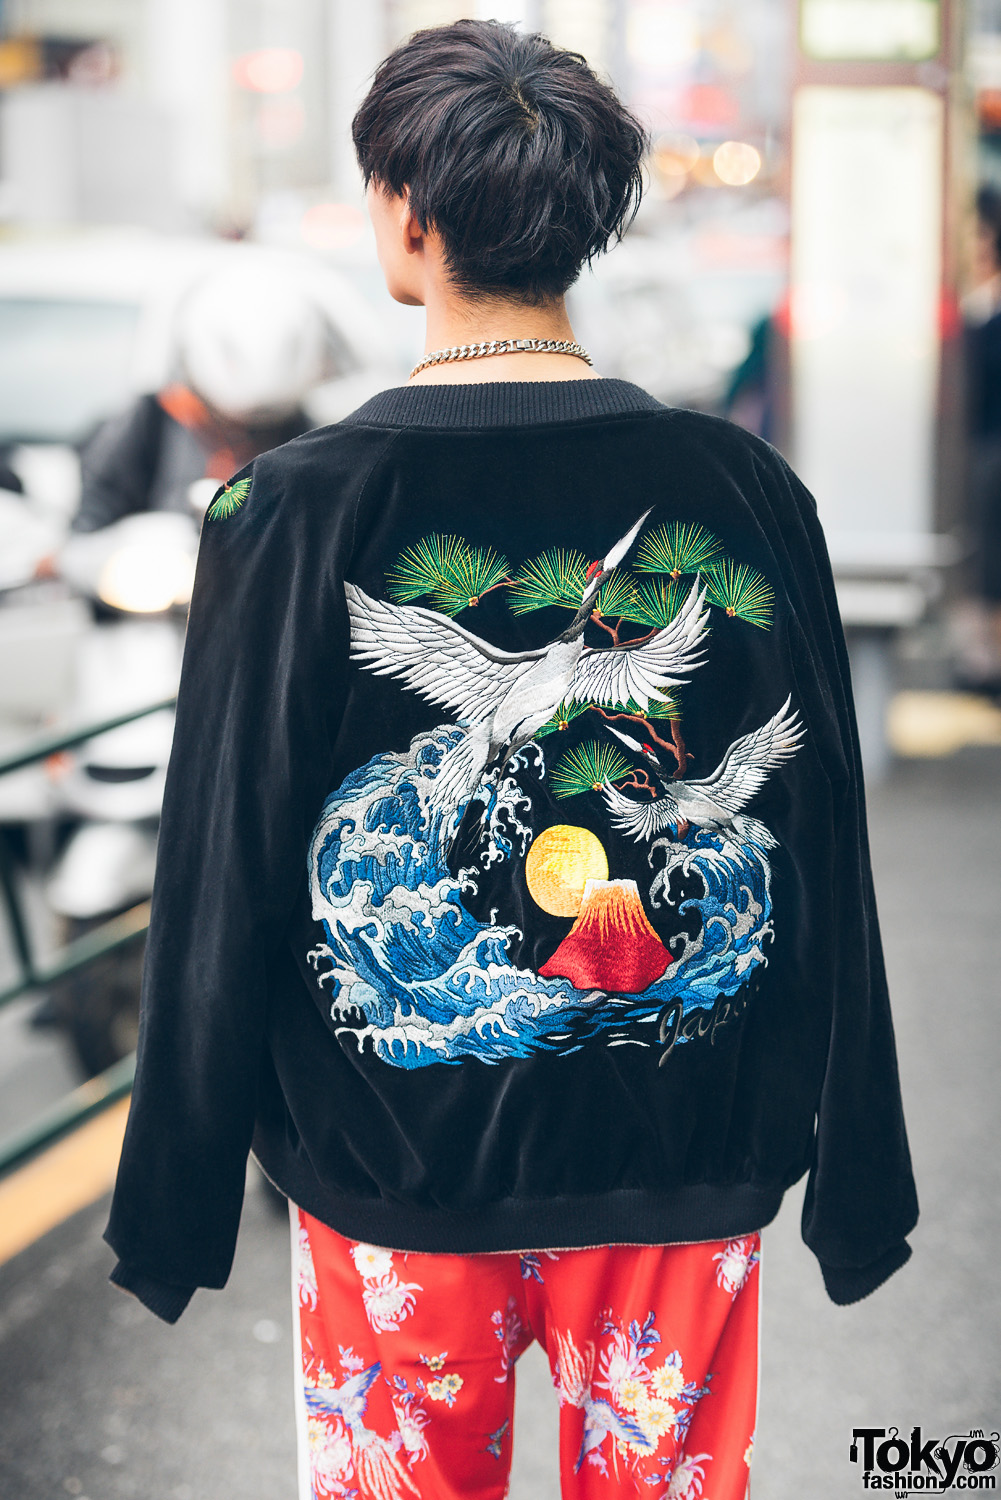 Harajuku Guy in Japanese Sukajan Jacket by Kula, Saint Laurent